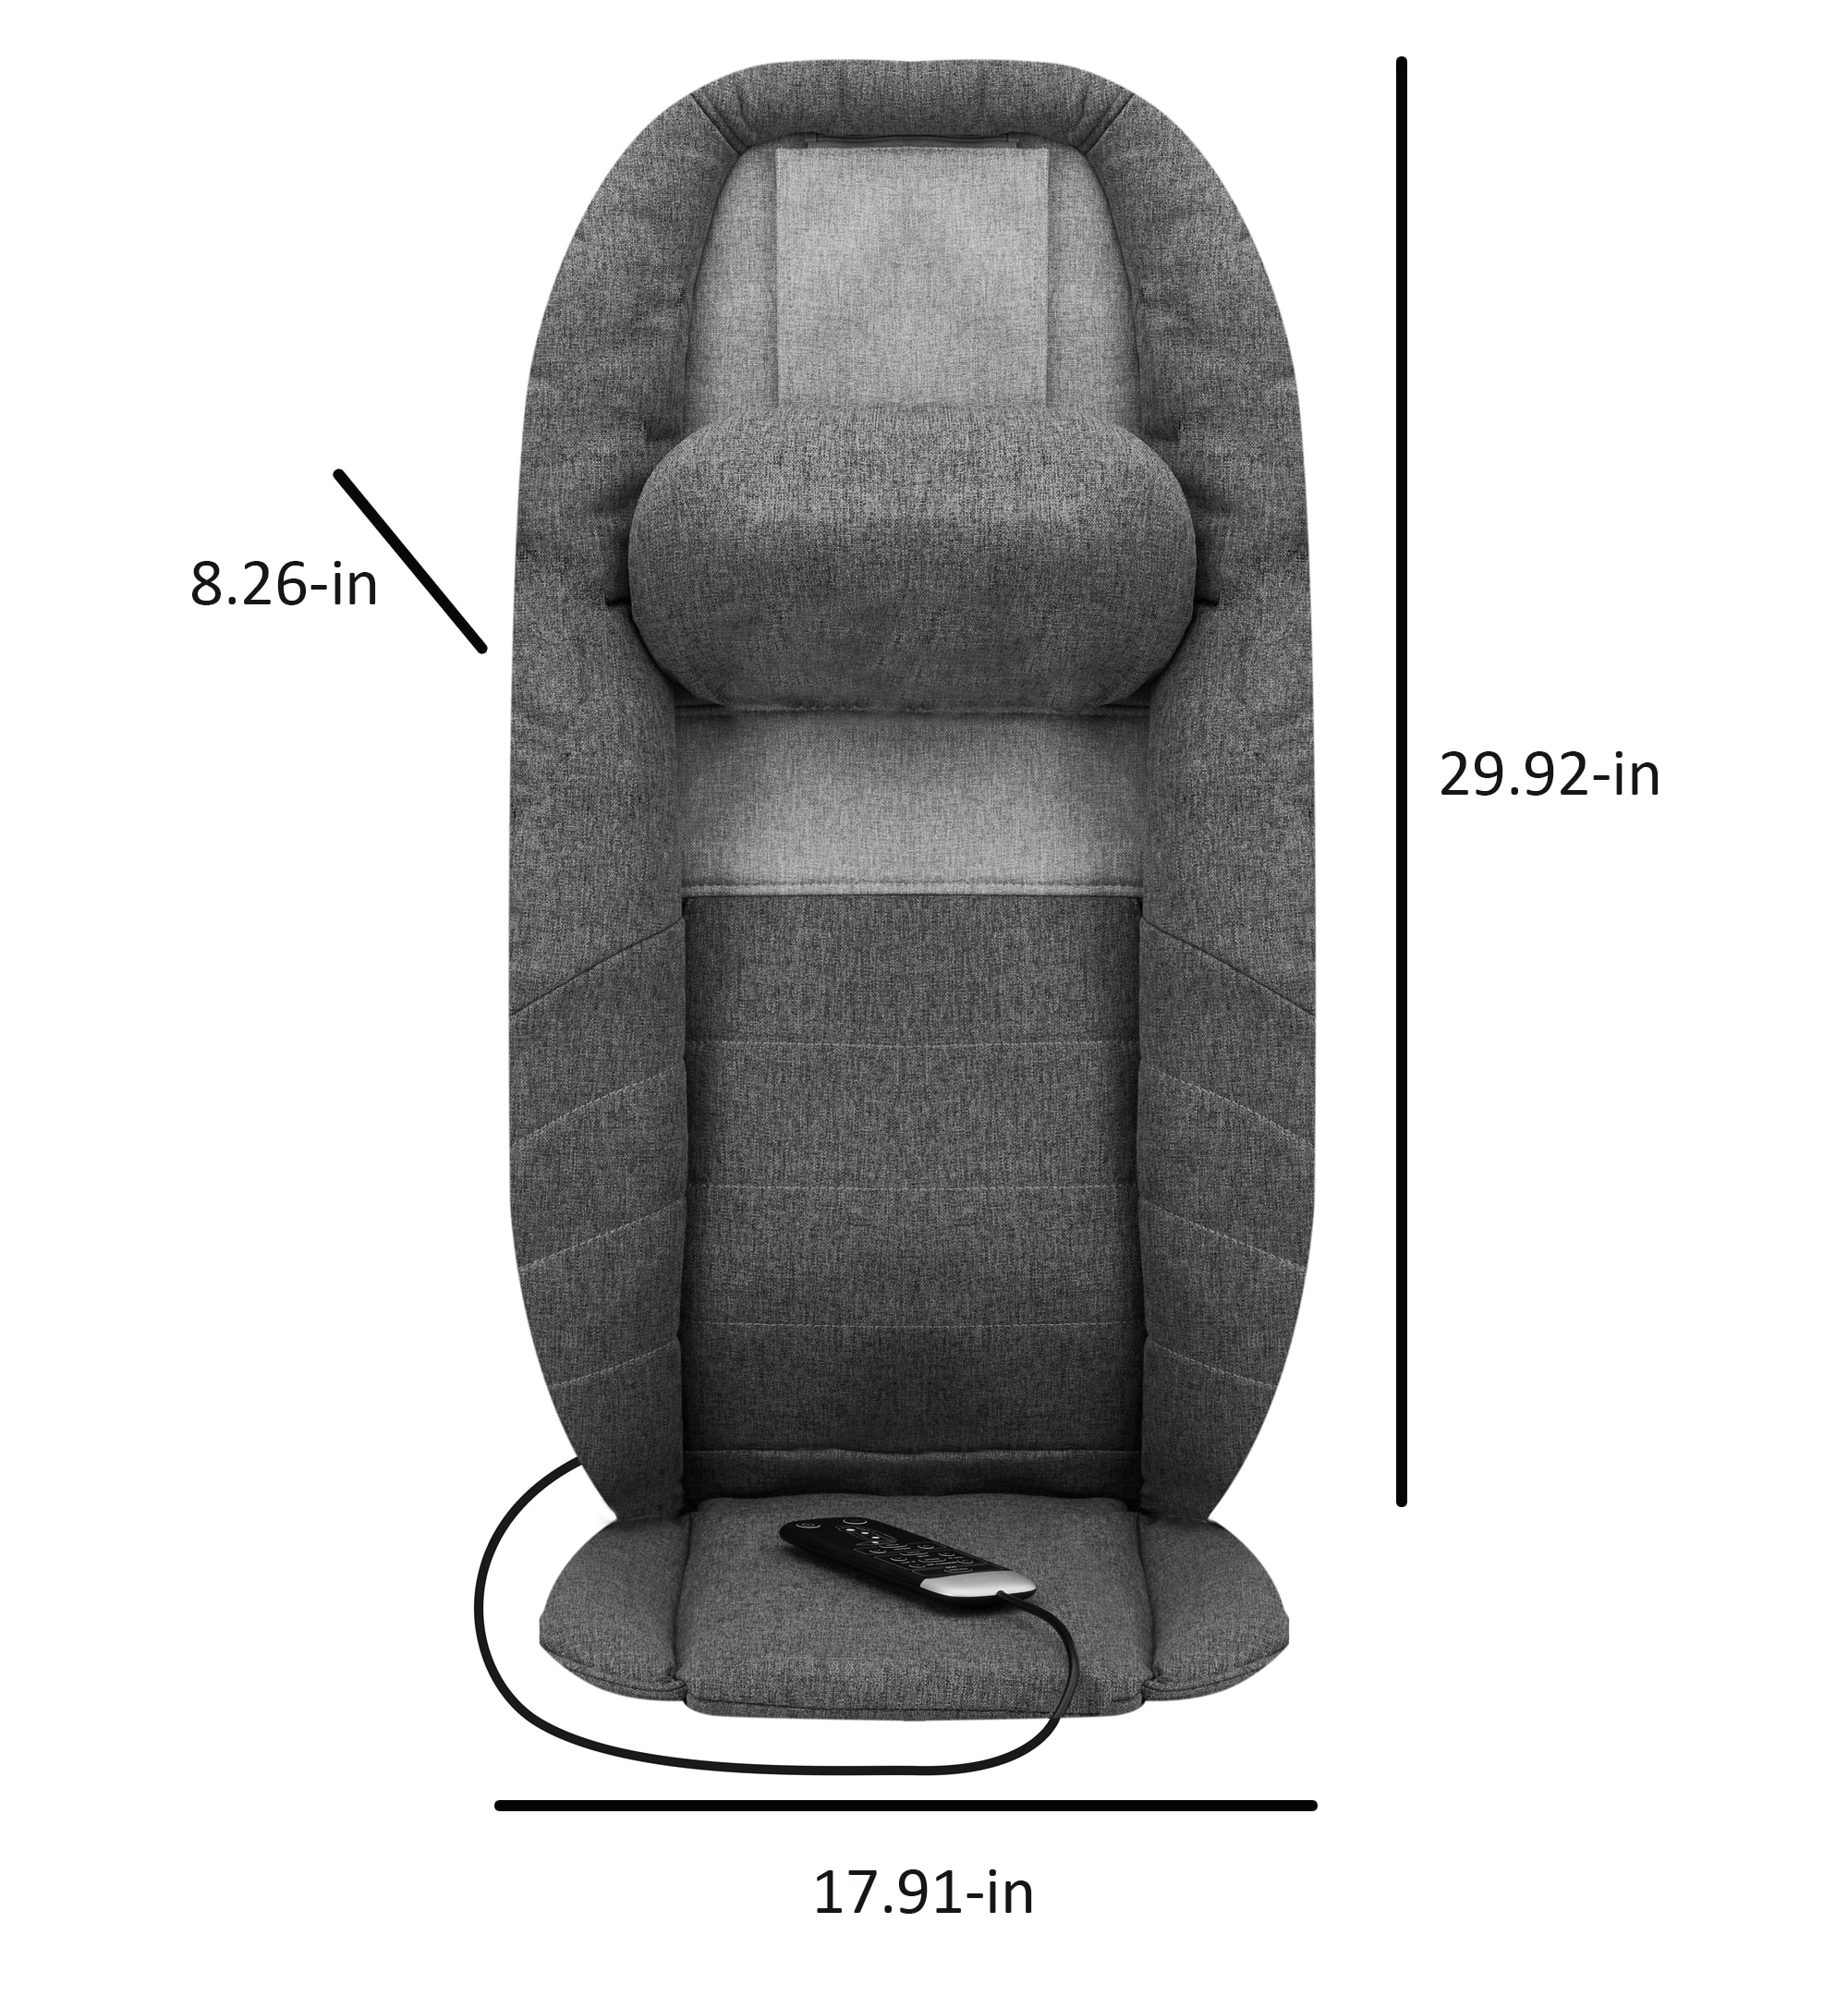 Contoured Seat Cushion with Heat - Homedics